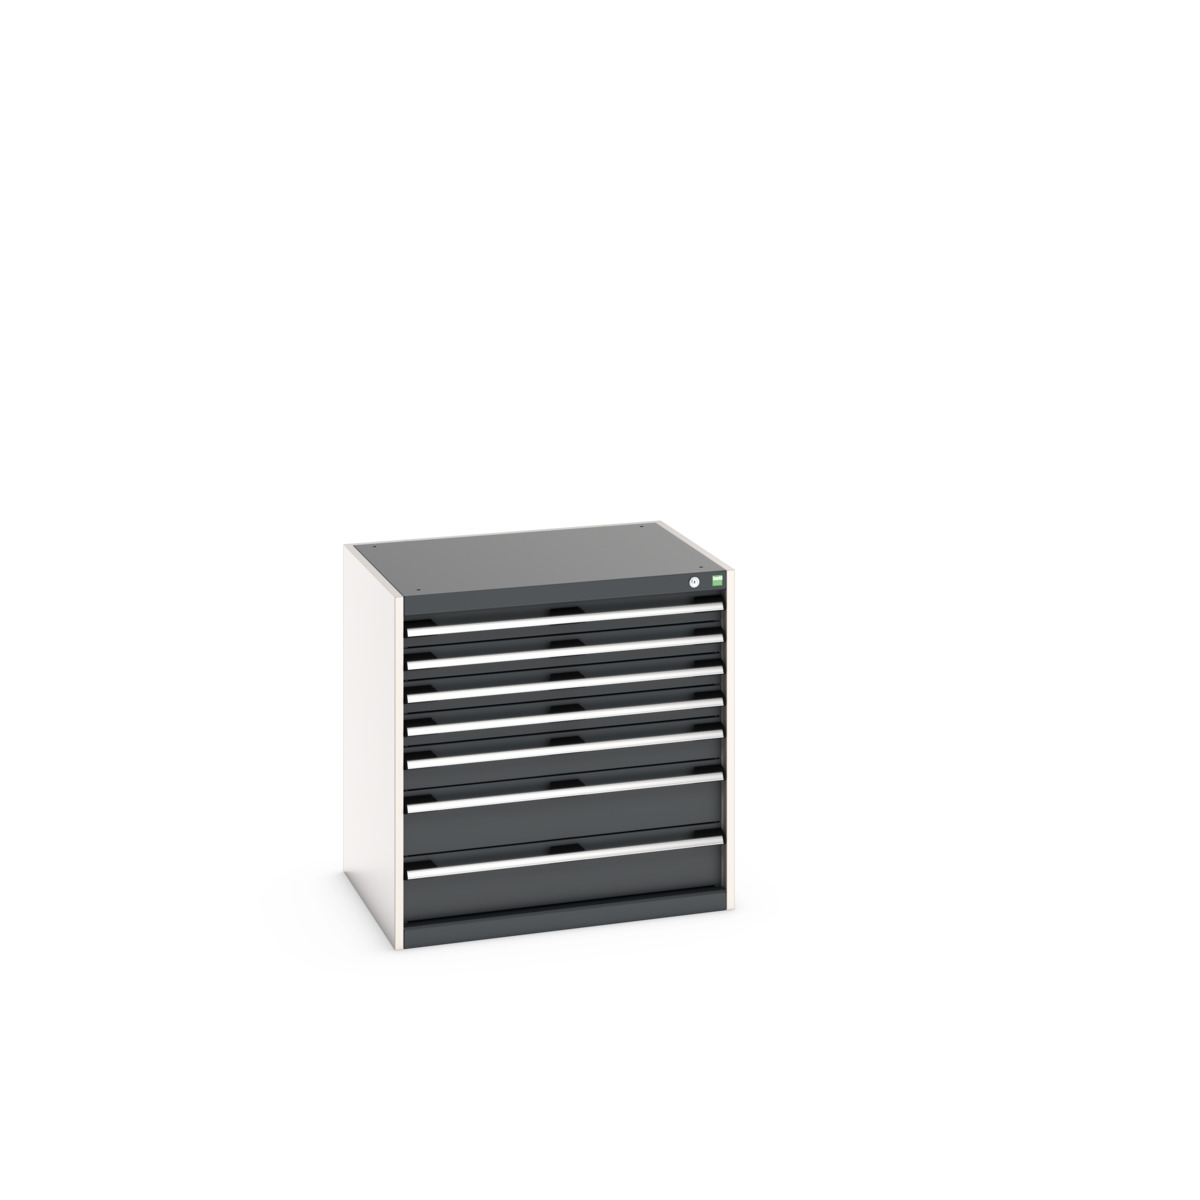 40020137. - cubio drawer cabinet